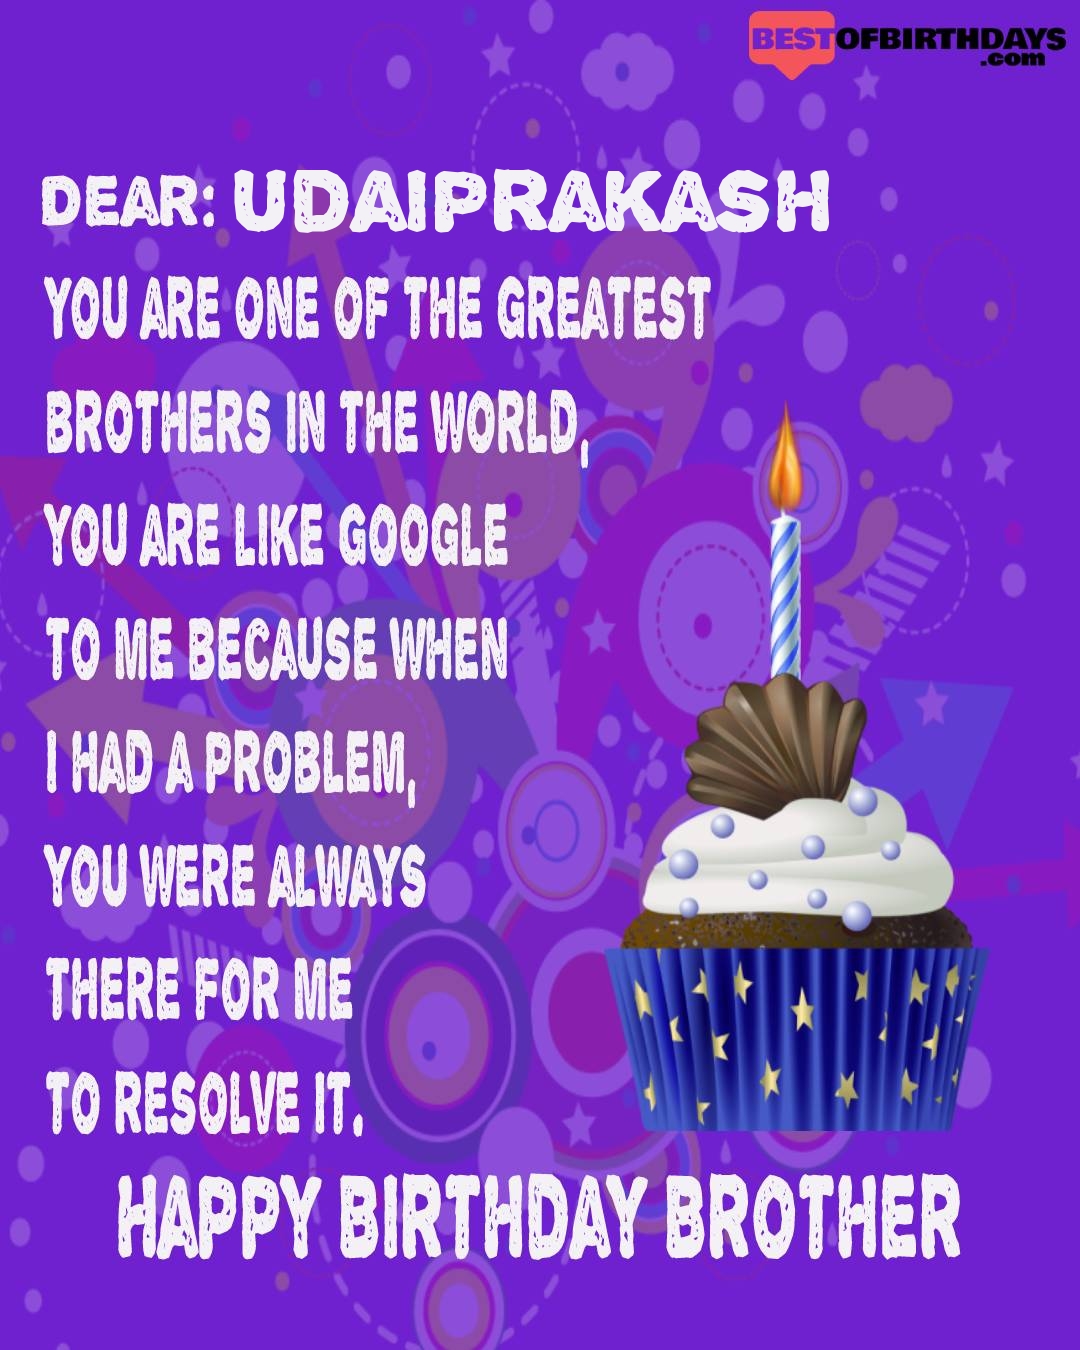 Happy birthday udaiprakash bhai brother bro